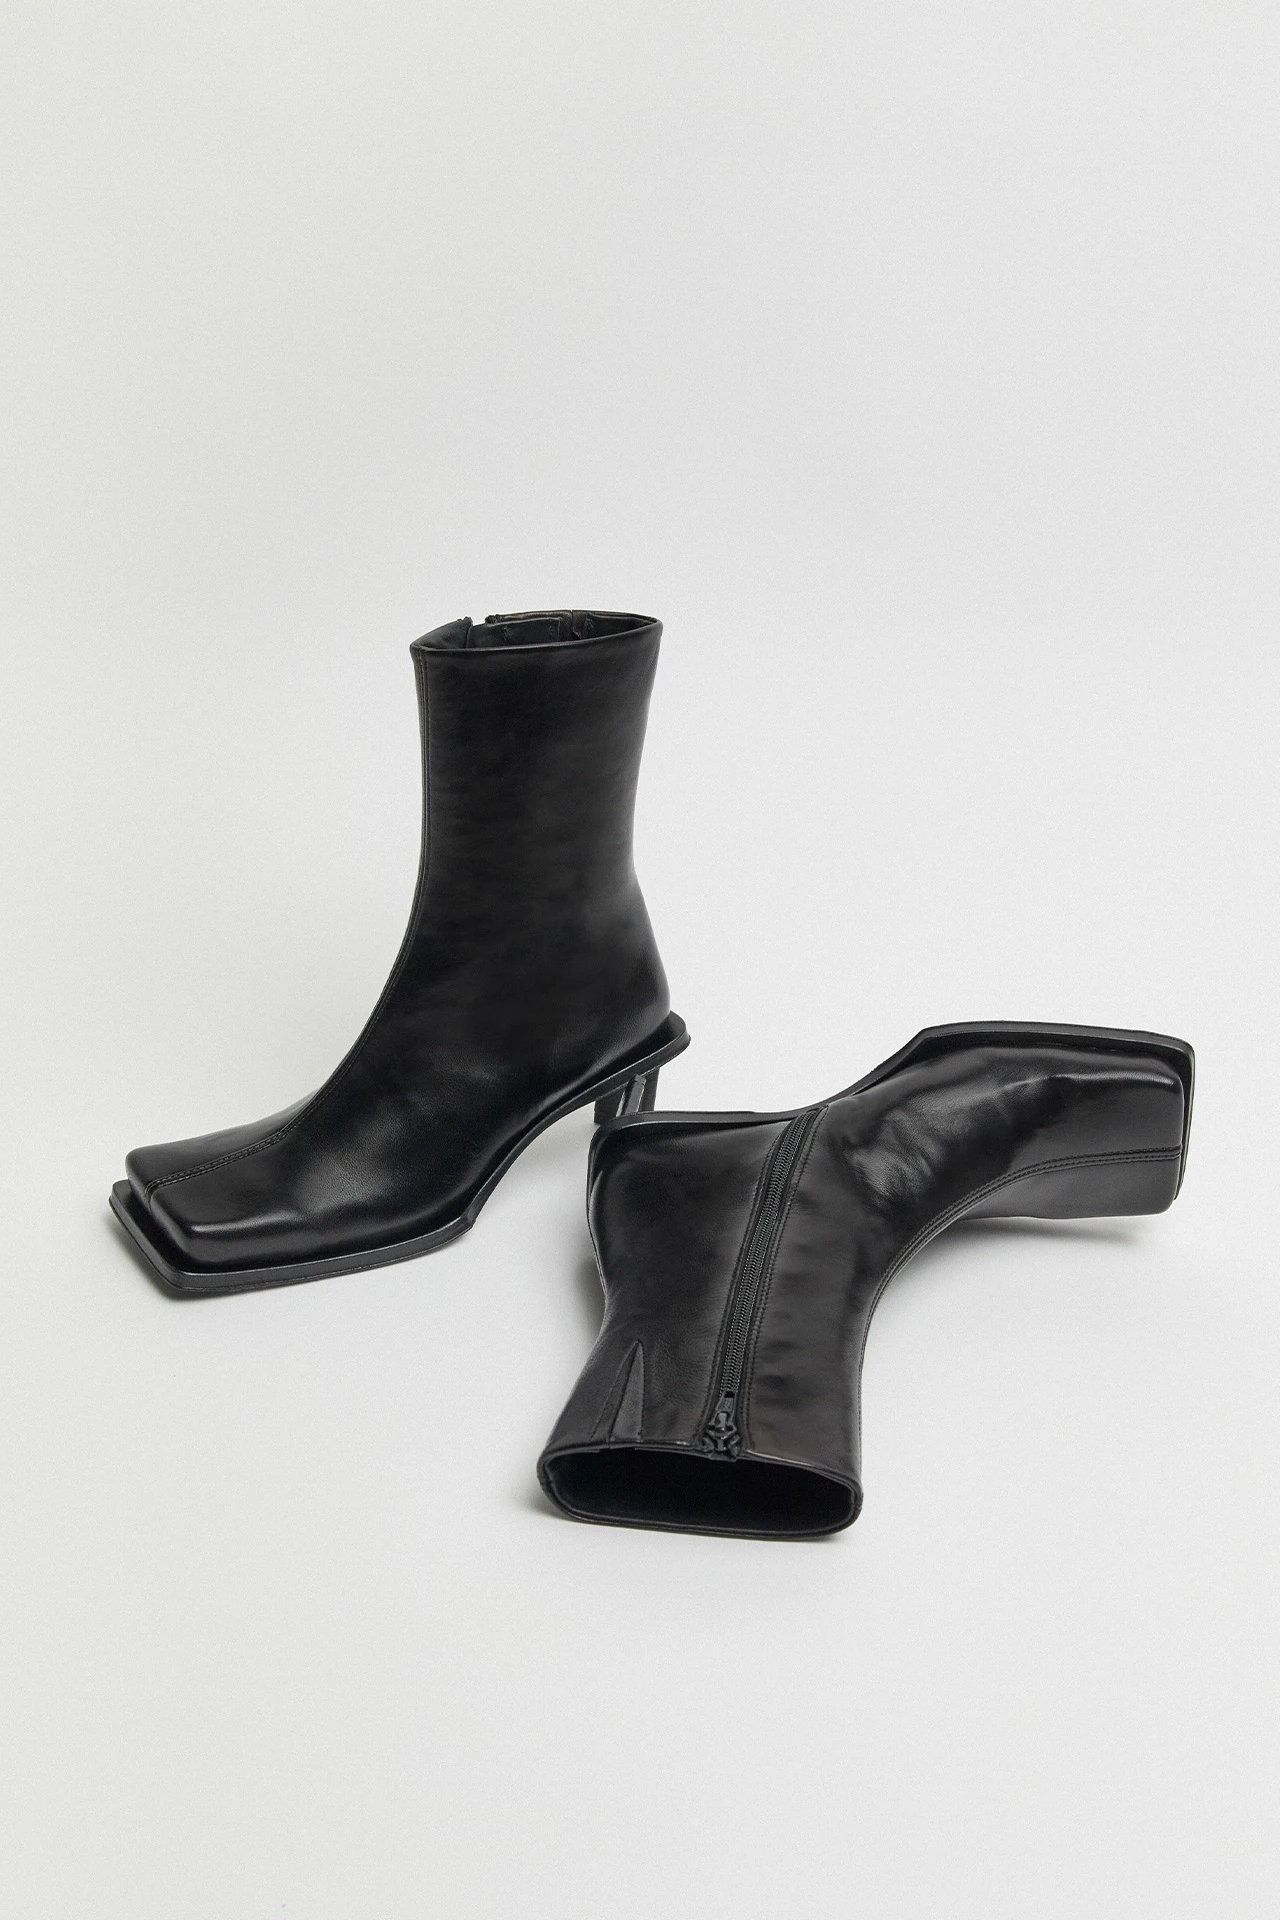 Miista-brenda-sonic-black-ankle-boots-02